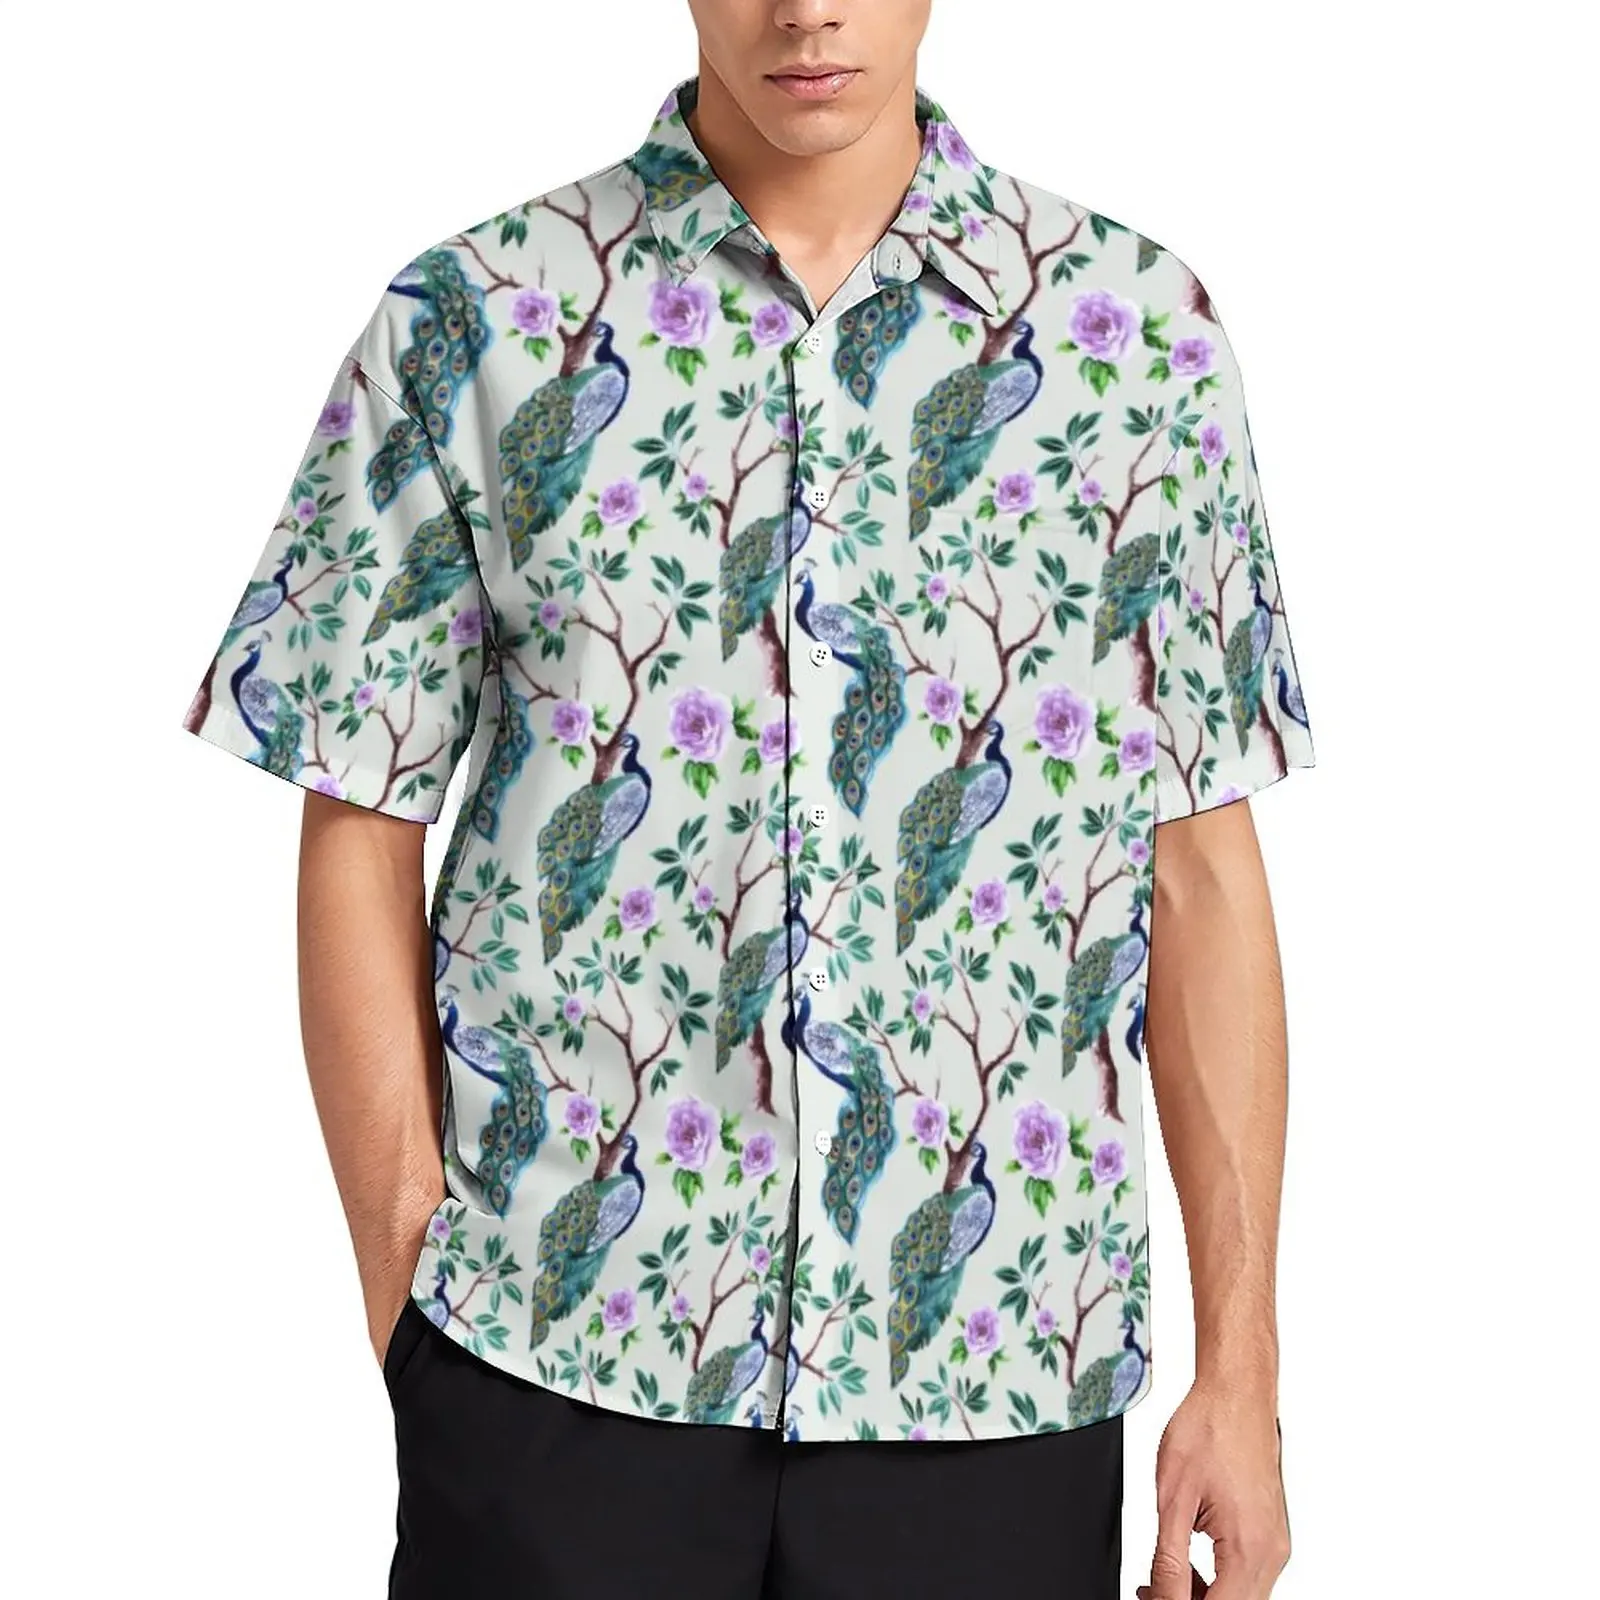 

Vintage Birds Beach Shirt Peacock in Flowering Tree Hawaiian Casual Shirts Men Y2K Blouses Short Sleeve Graphic Clothes 3XL 4XL